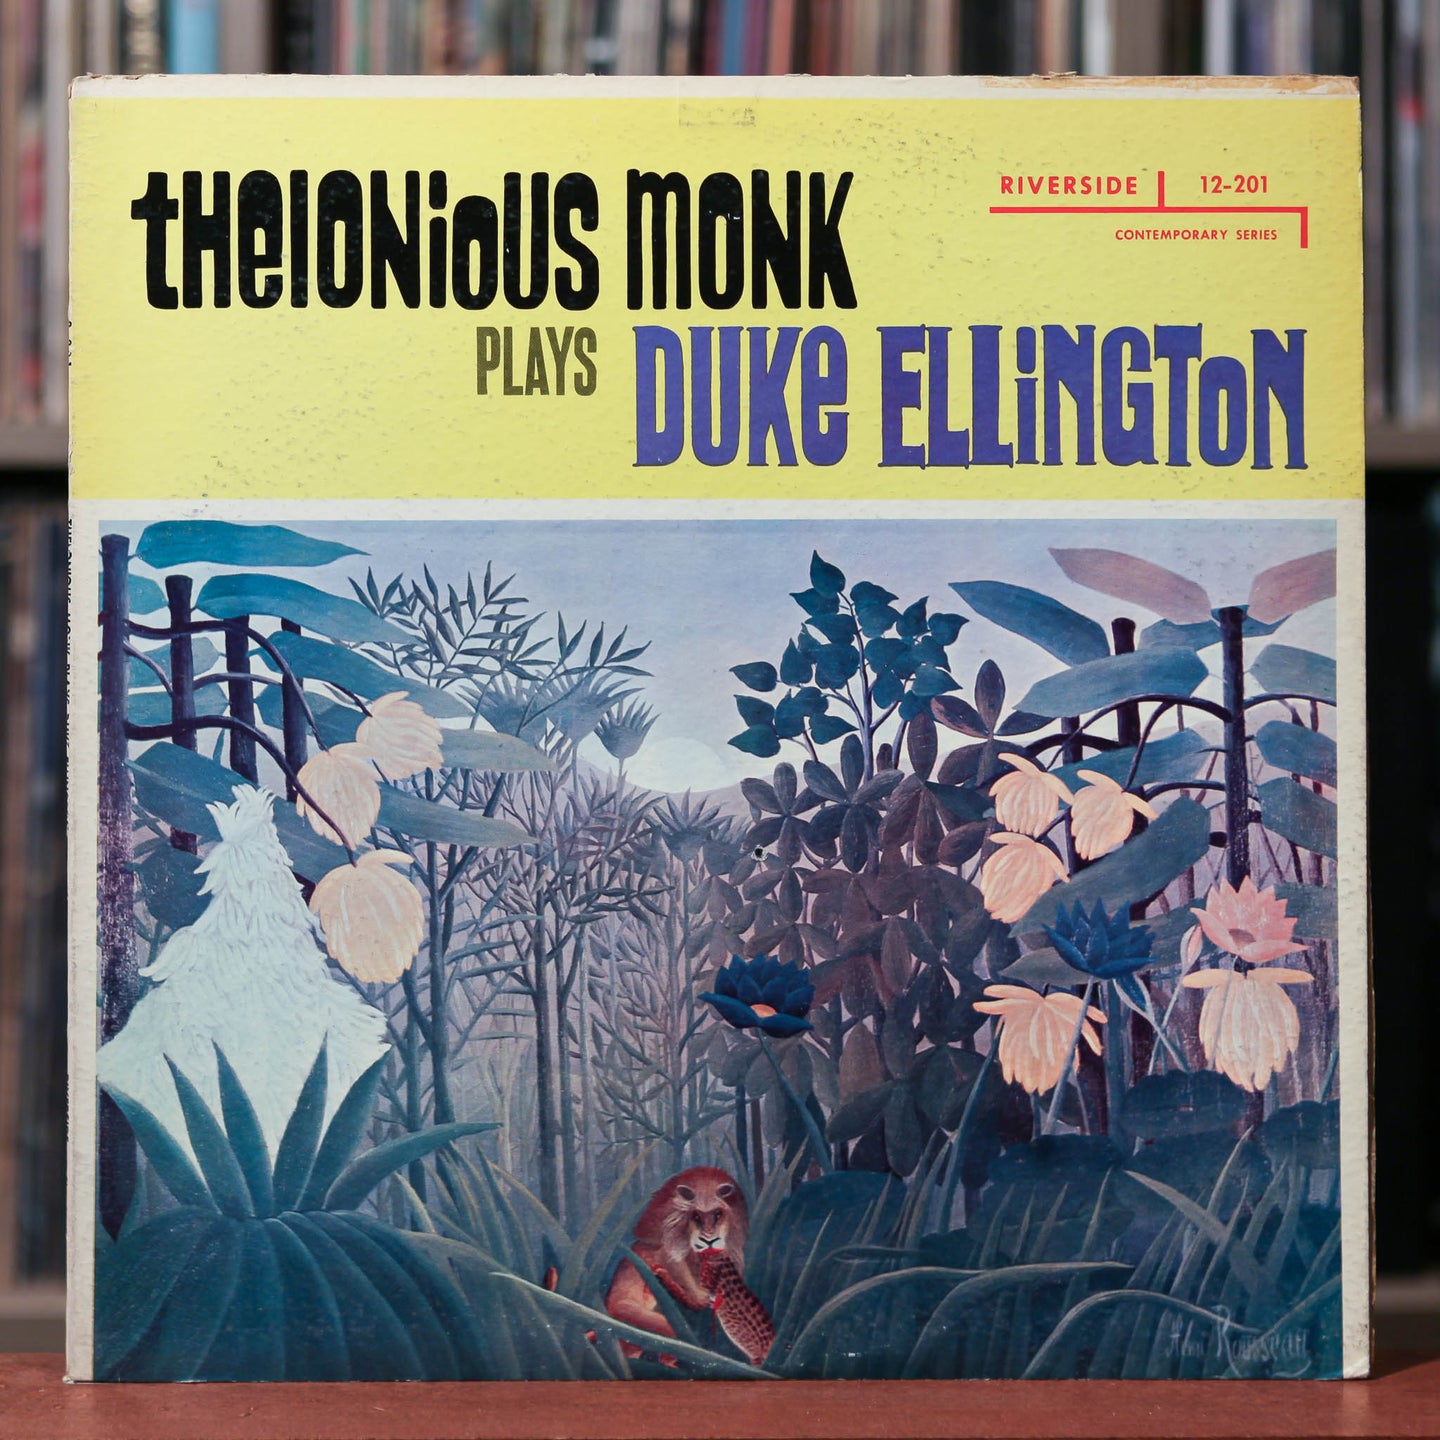 Thelonious Monk - Plays Duke Ellington - 1958 Riverside - G+/VG